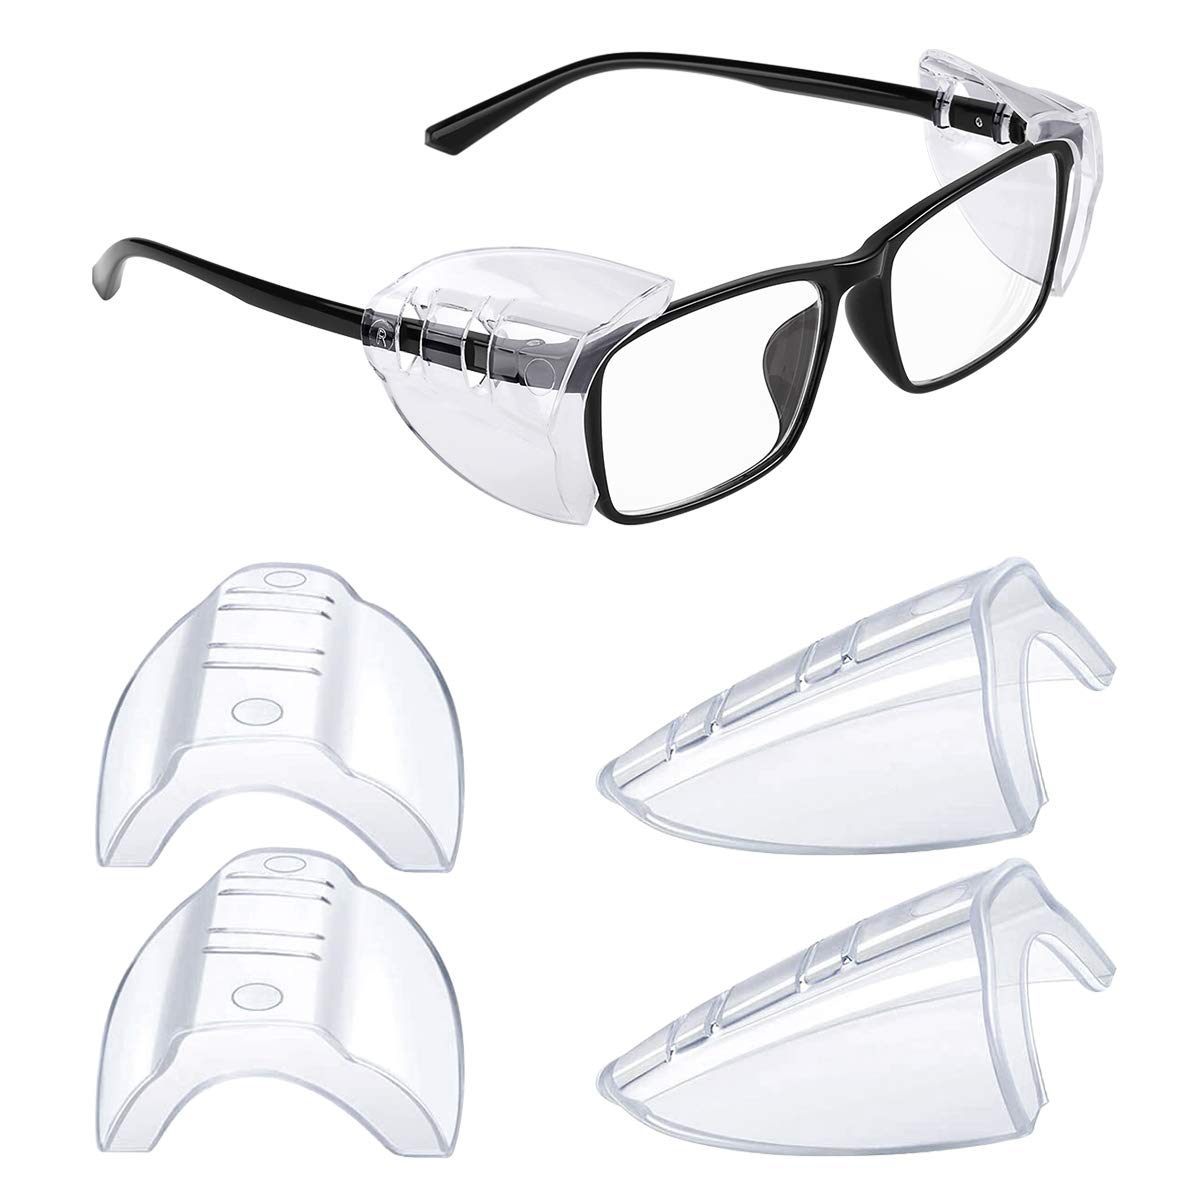 MELASA 2 Pairs Side Shields for Prescription glasses, Safety glasses Side Shields for Eye Protection, Slip on Side Shields for E